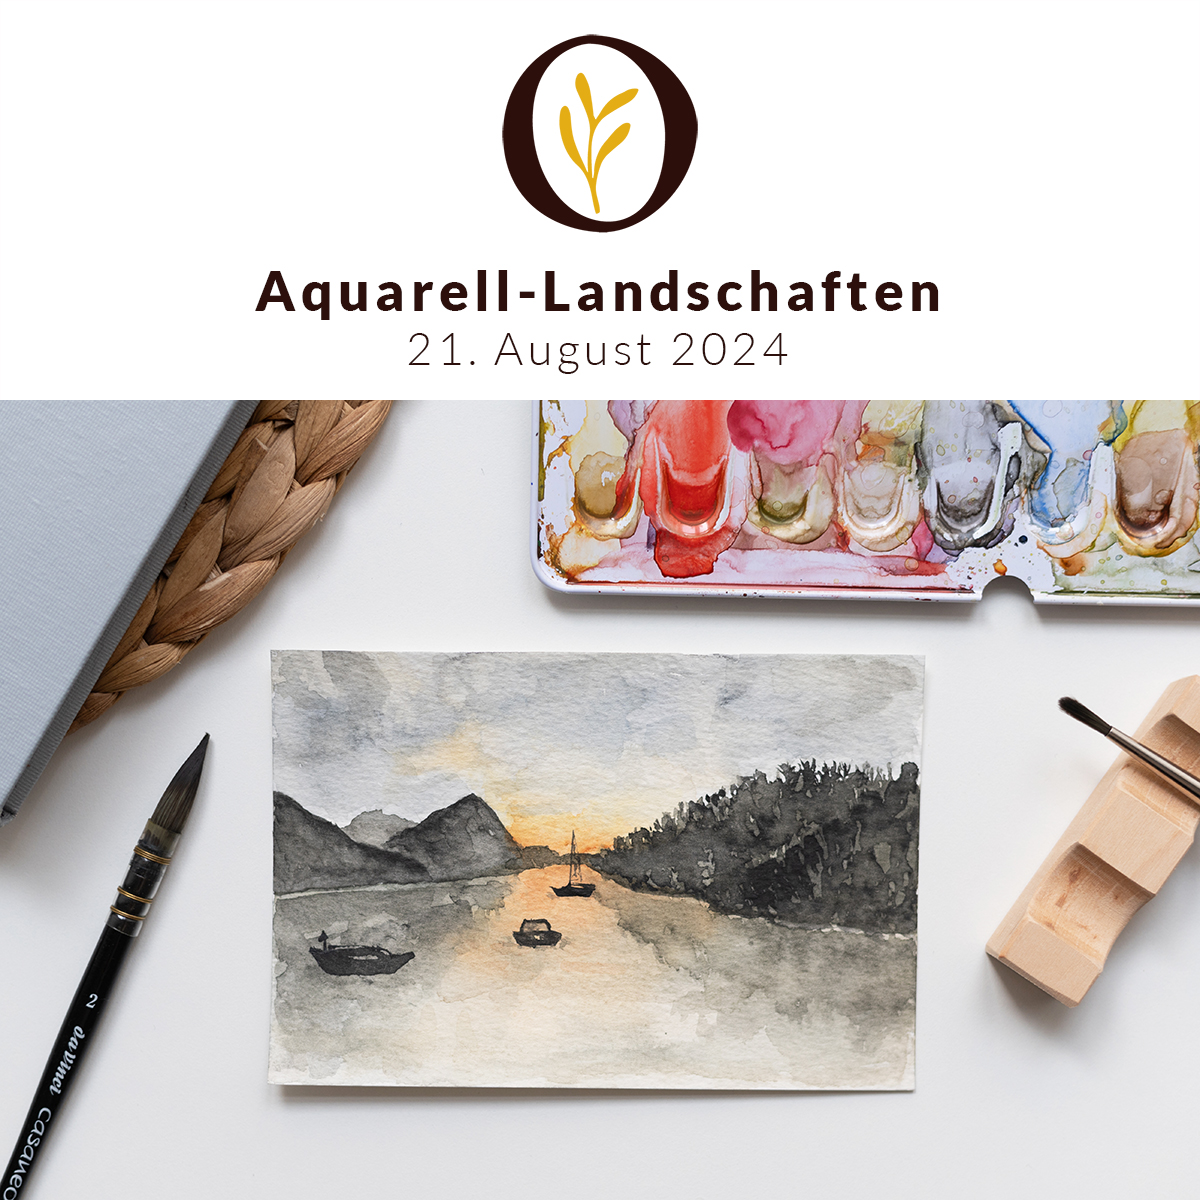 Aquarell-Landschaften malen | Ocker Studio